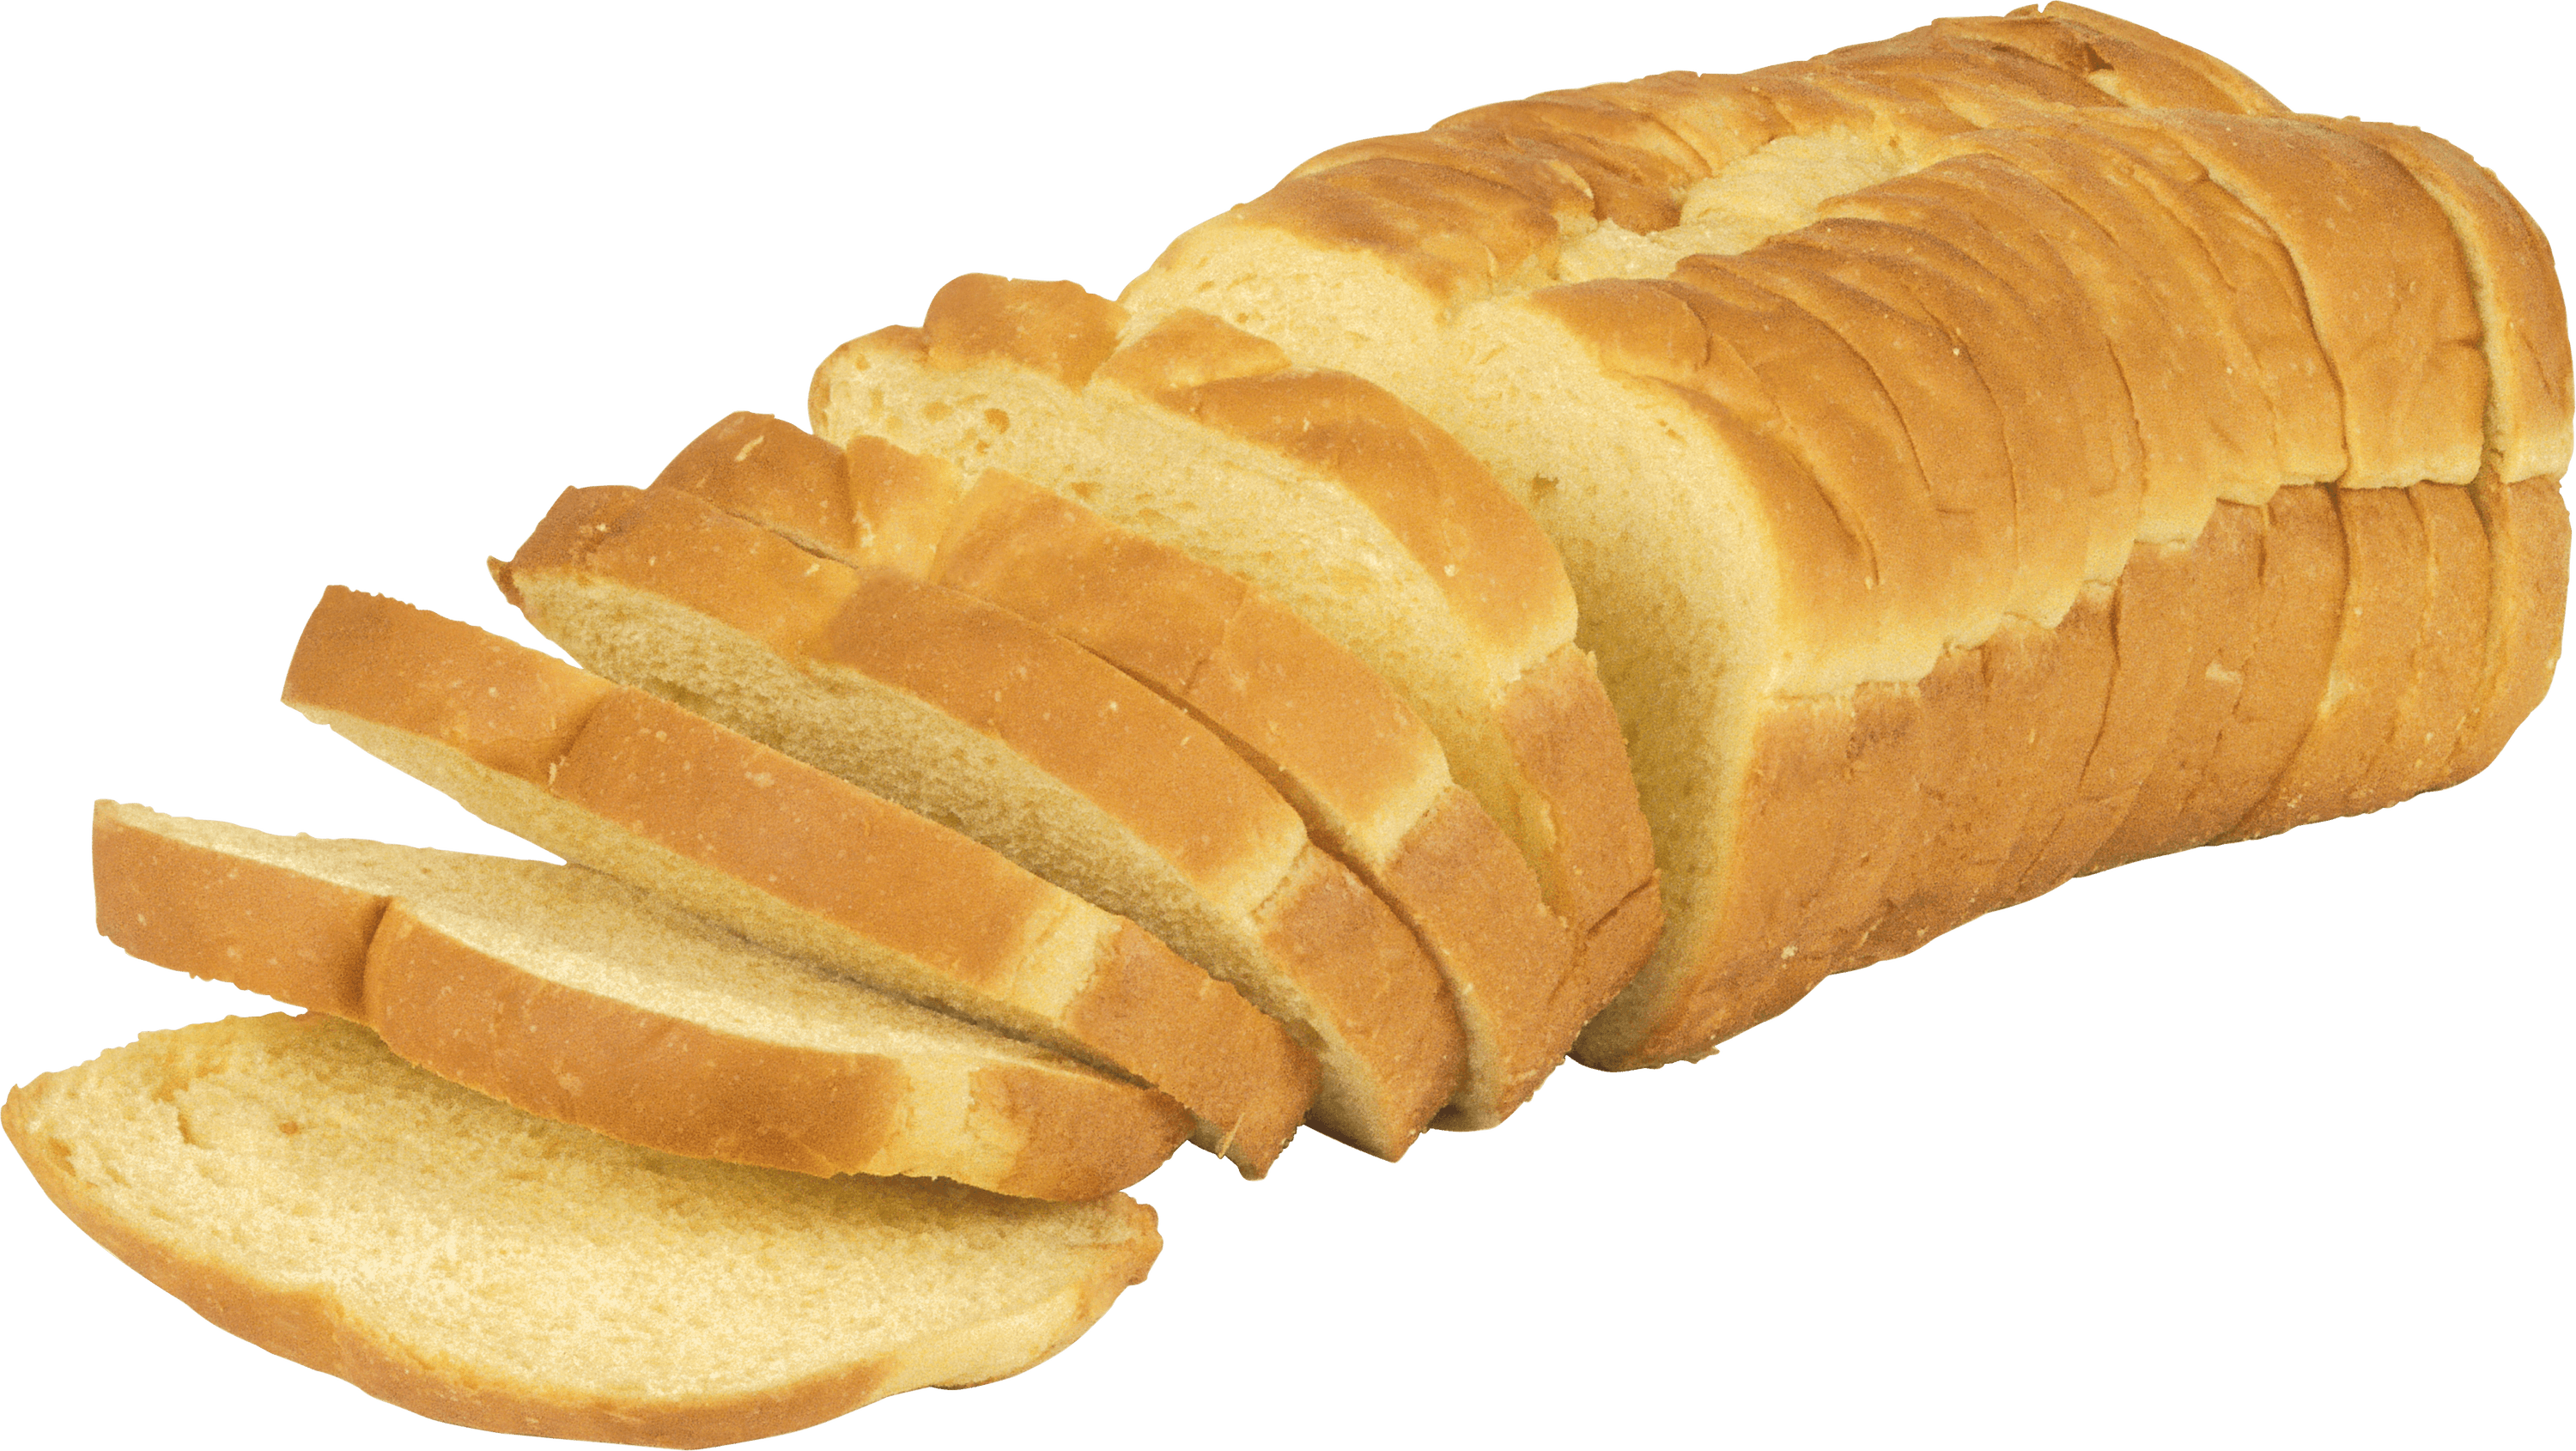 Loaf Bake Bread Free Photo PNG Image